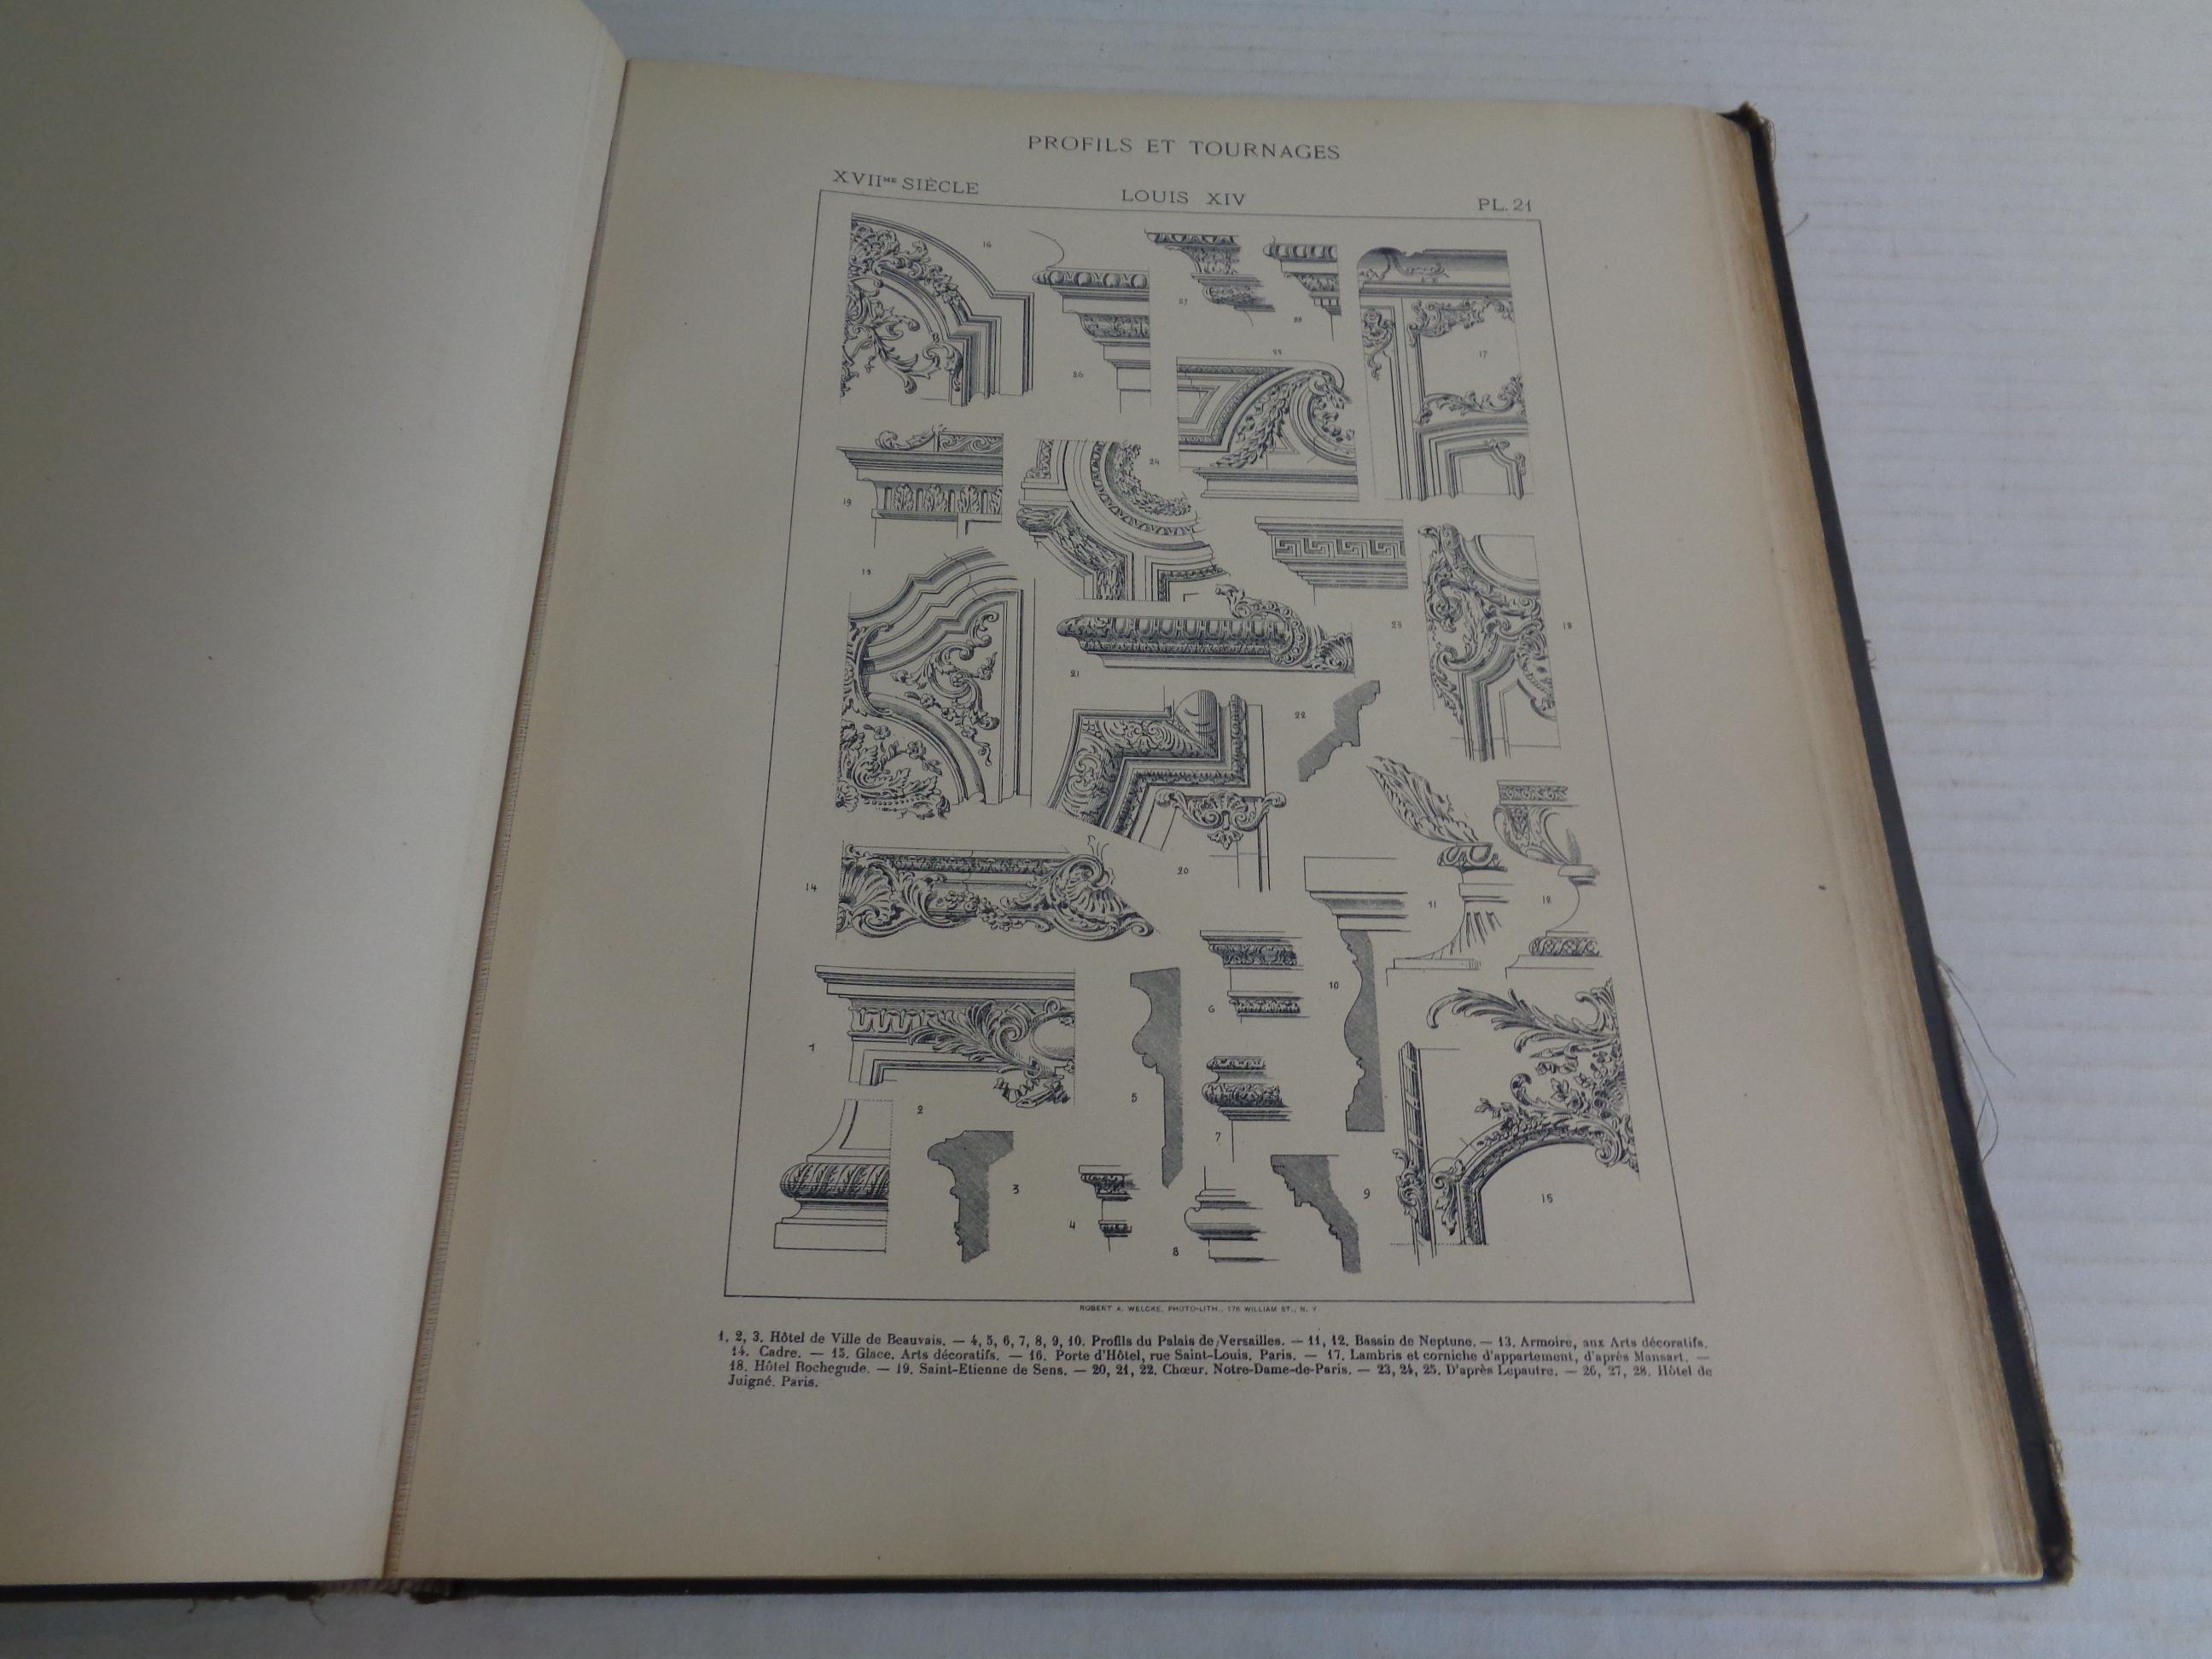  FRENCH STYLES: Furniture & Architecture - Bajot, Paris - 19th C. Folio Book For Sale 2